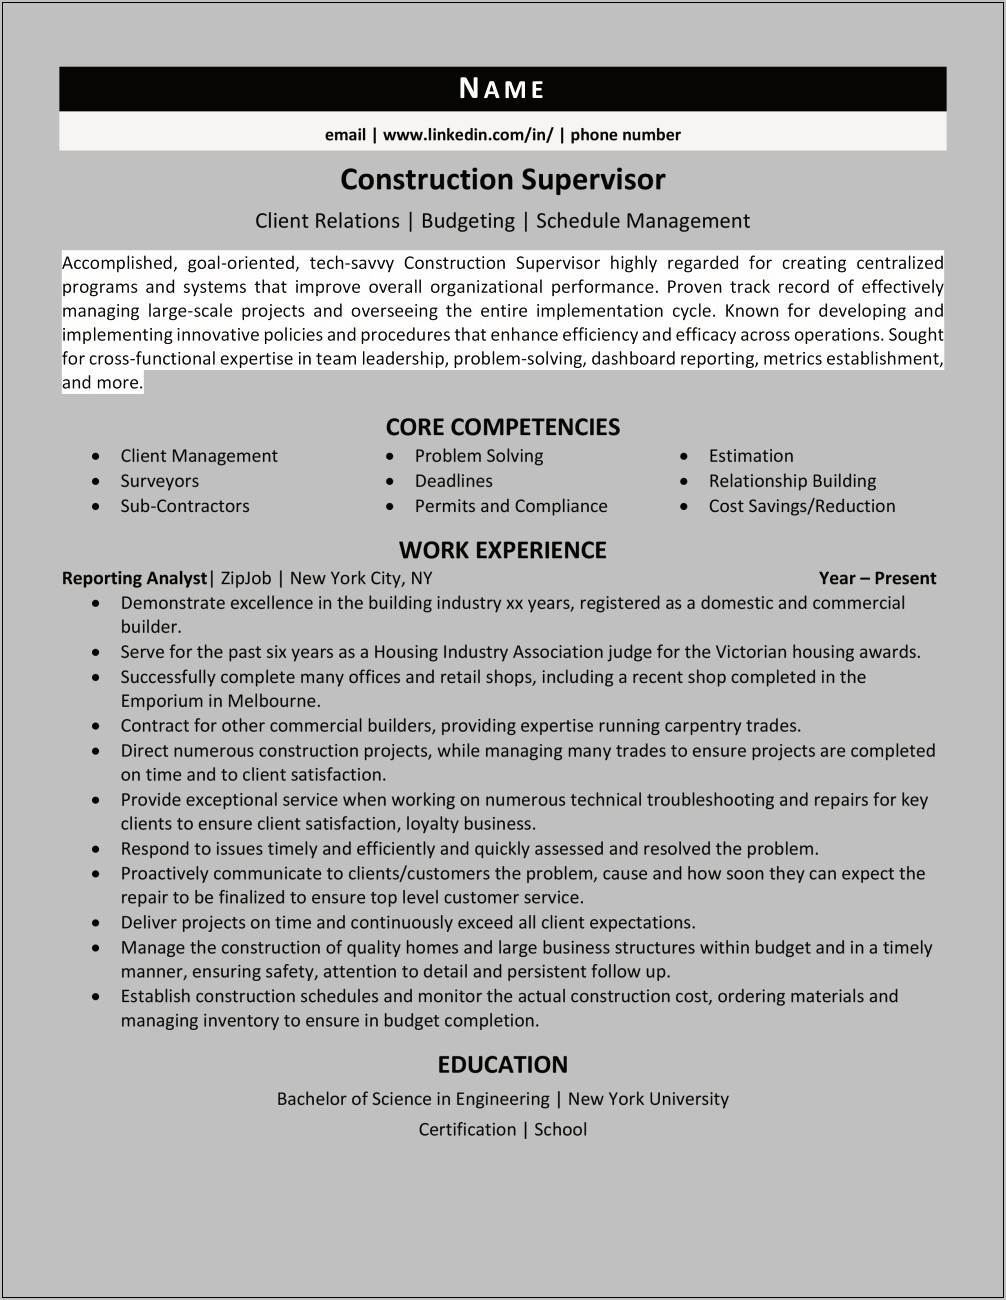 Construction Supervisor Job Description Resume